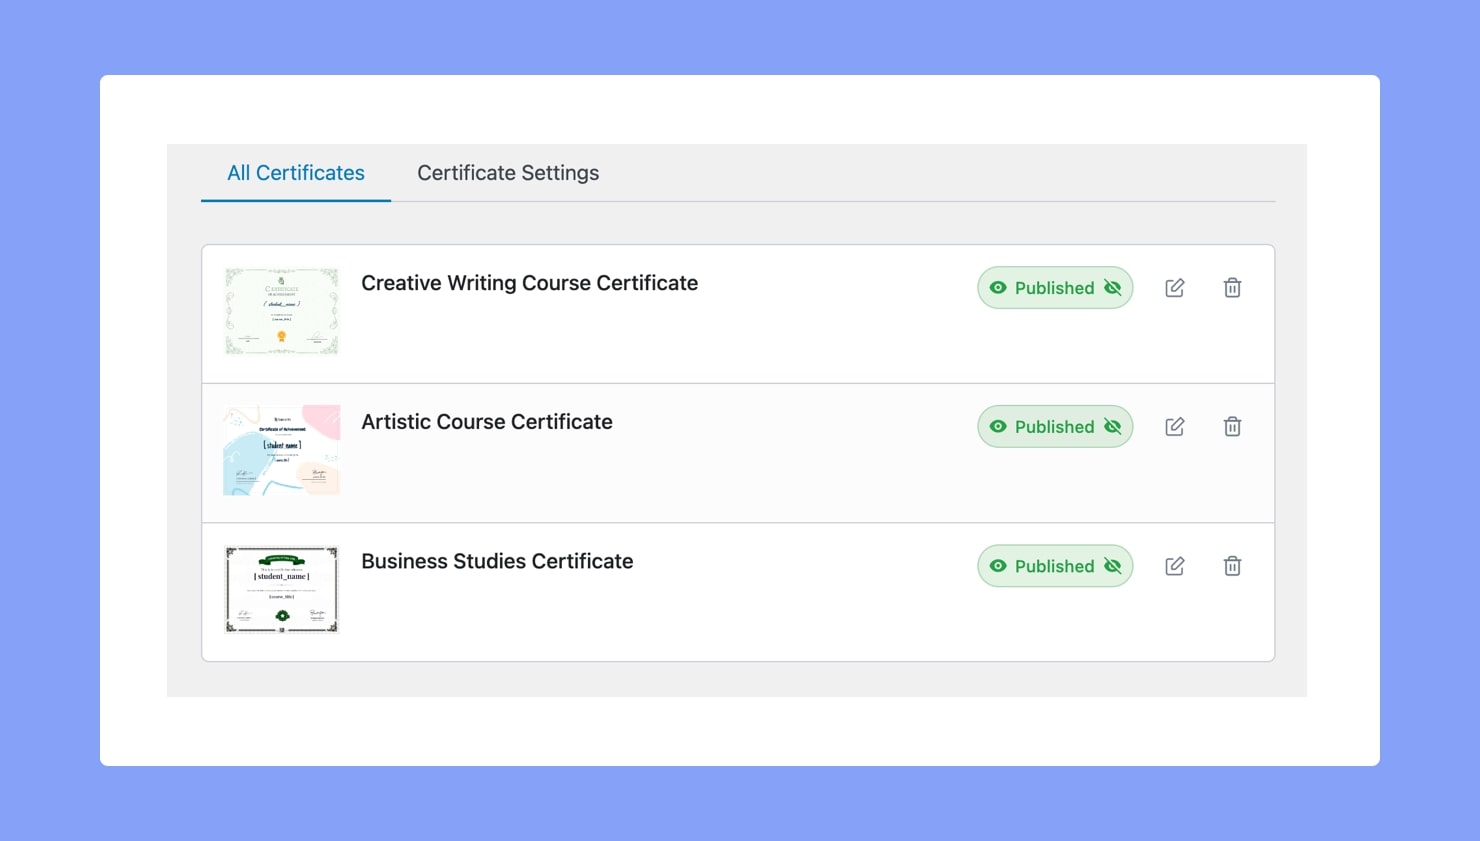 Tutor LMS Certificate Settings - All Certificates